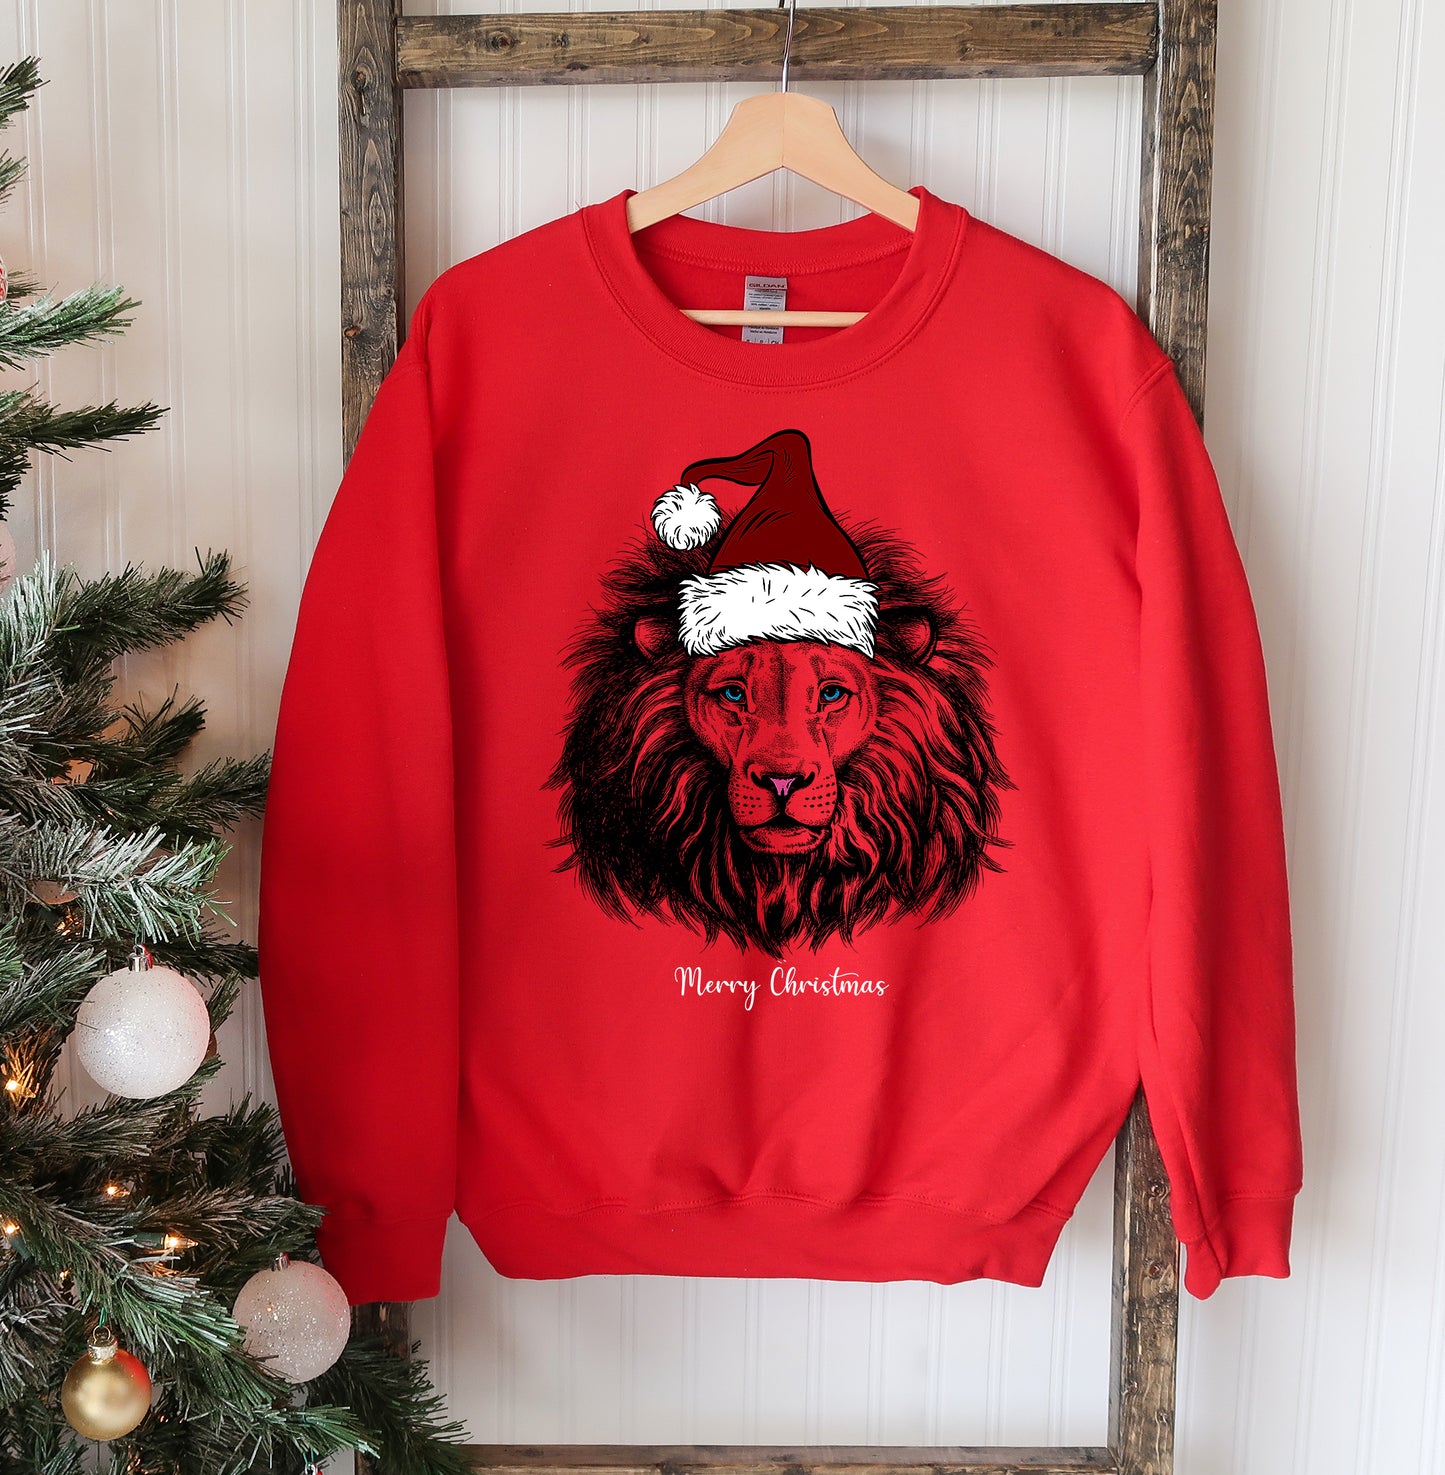 Roaring Sweatshirt for a Wild Christmas